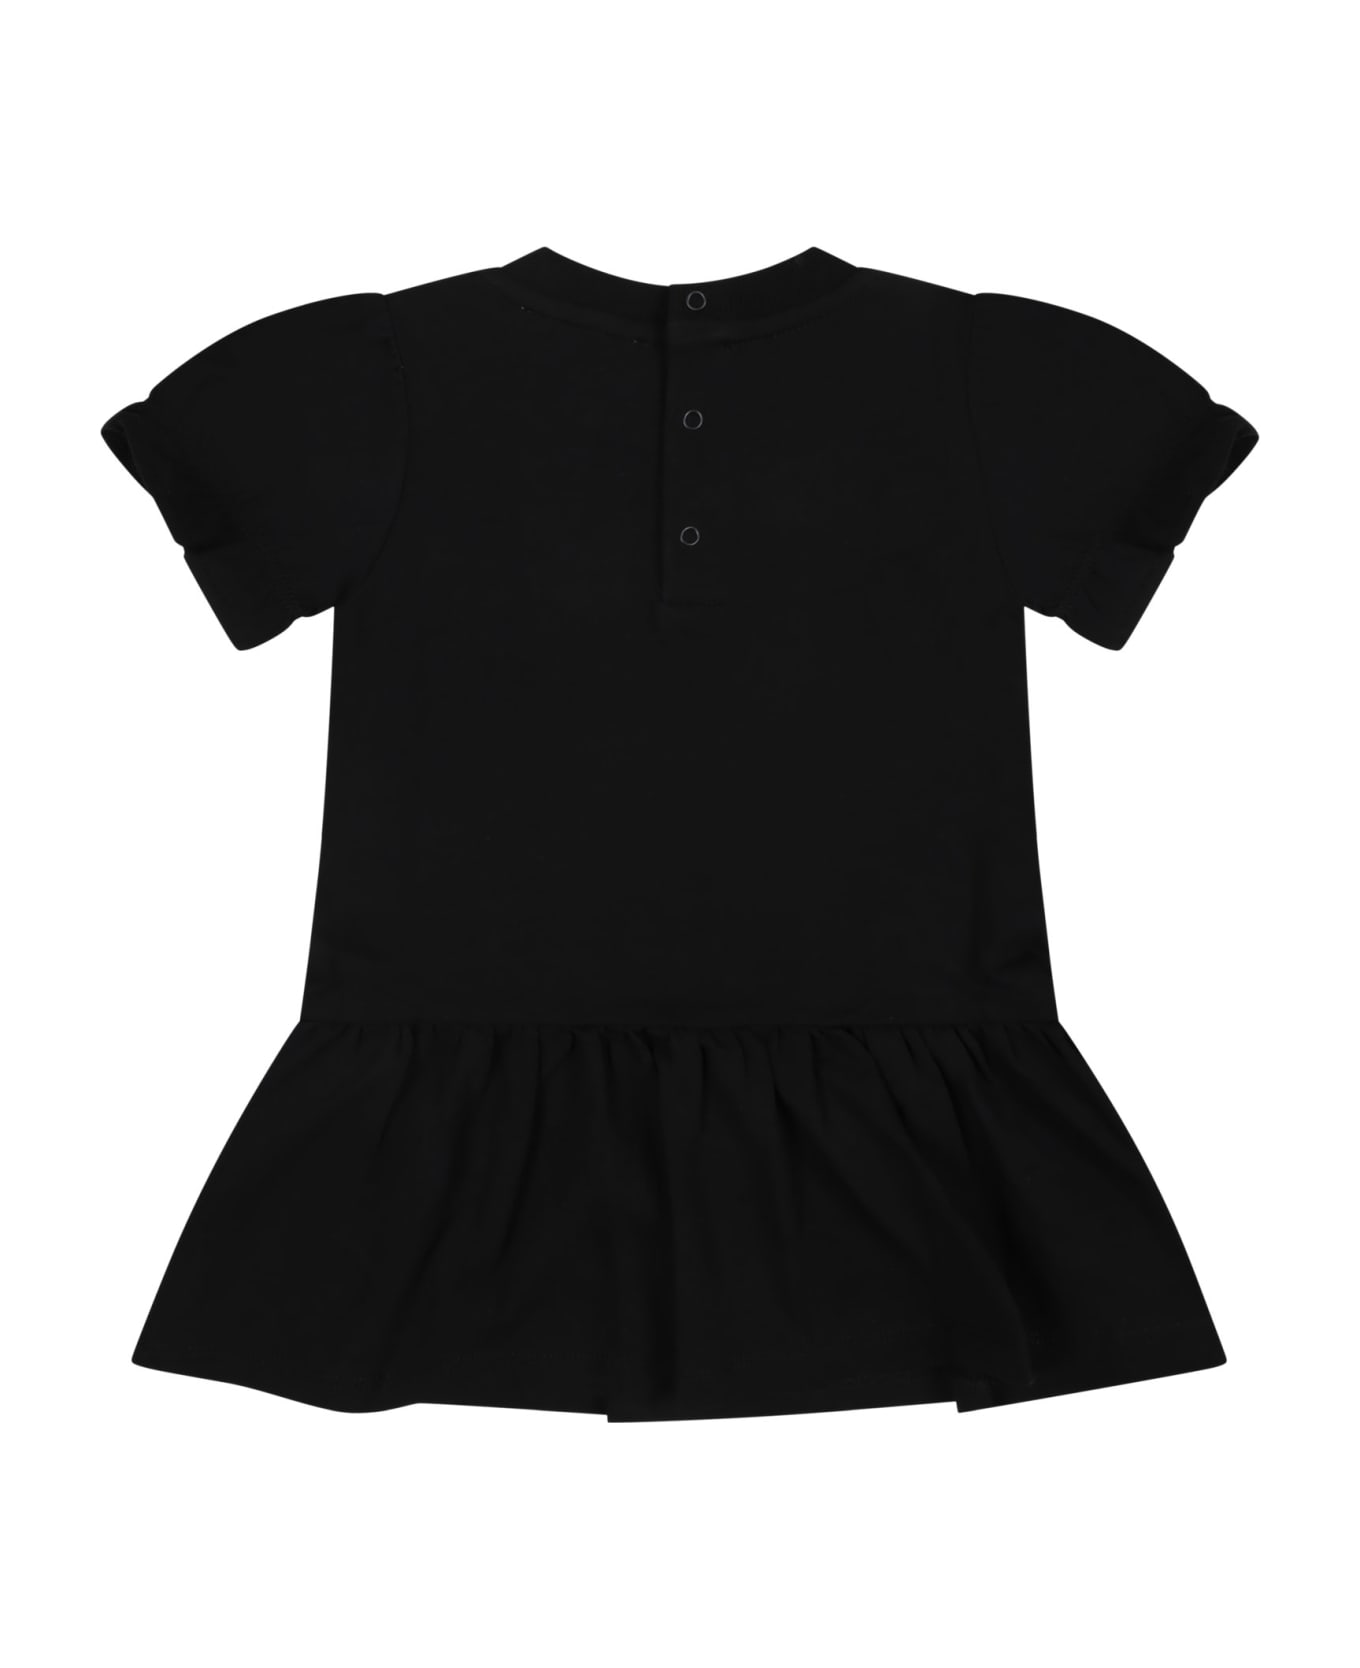 Moschino Black Dress For Baby Girl With Teddy Bear Print - Black ウェア